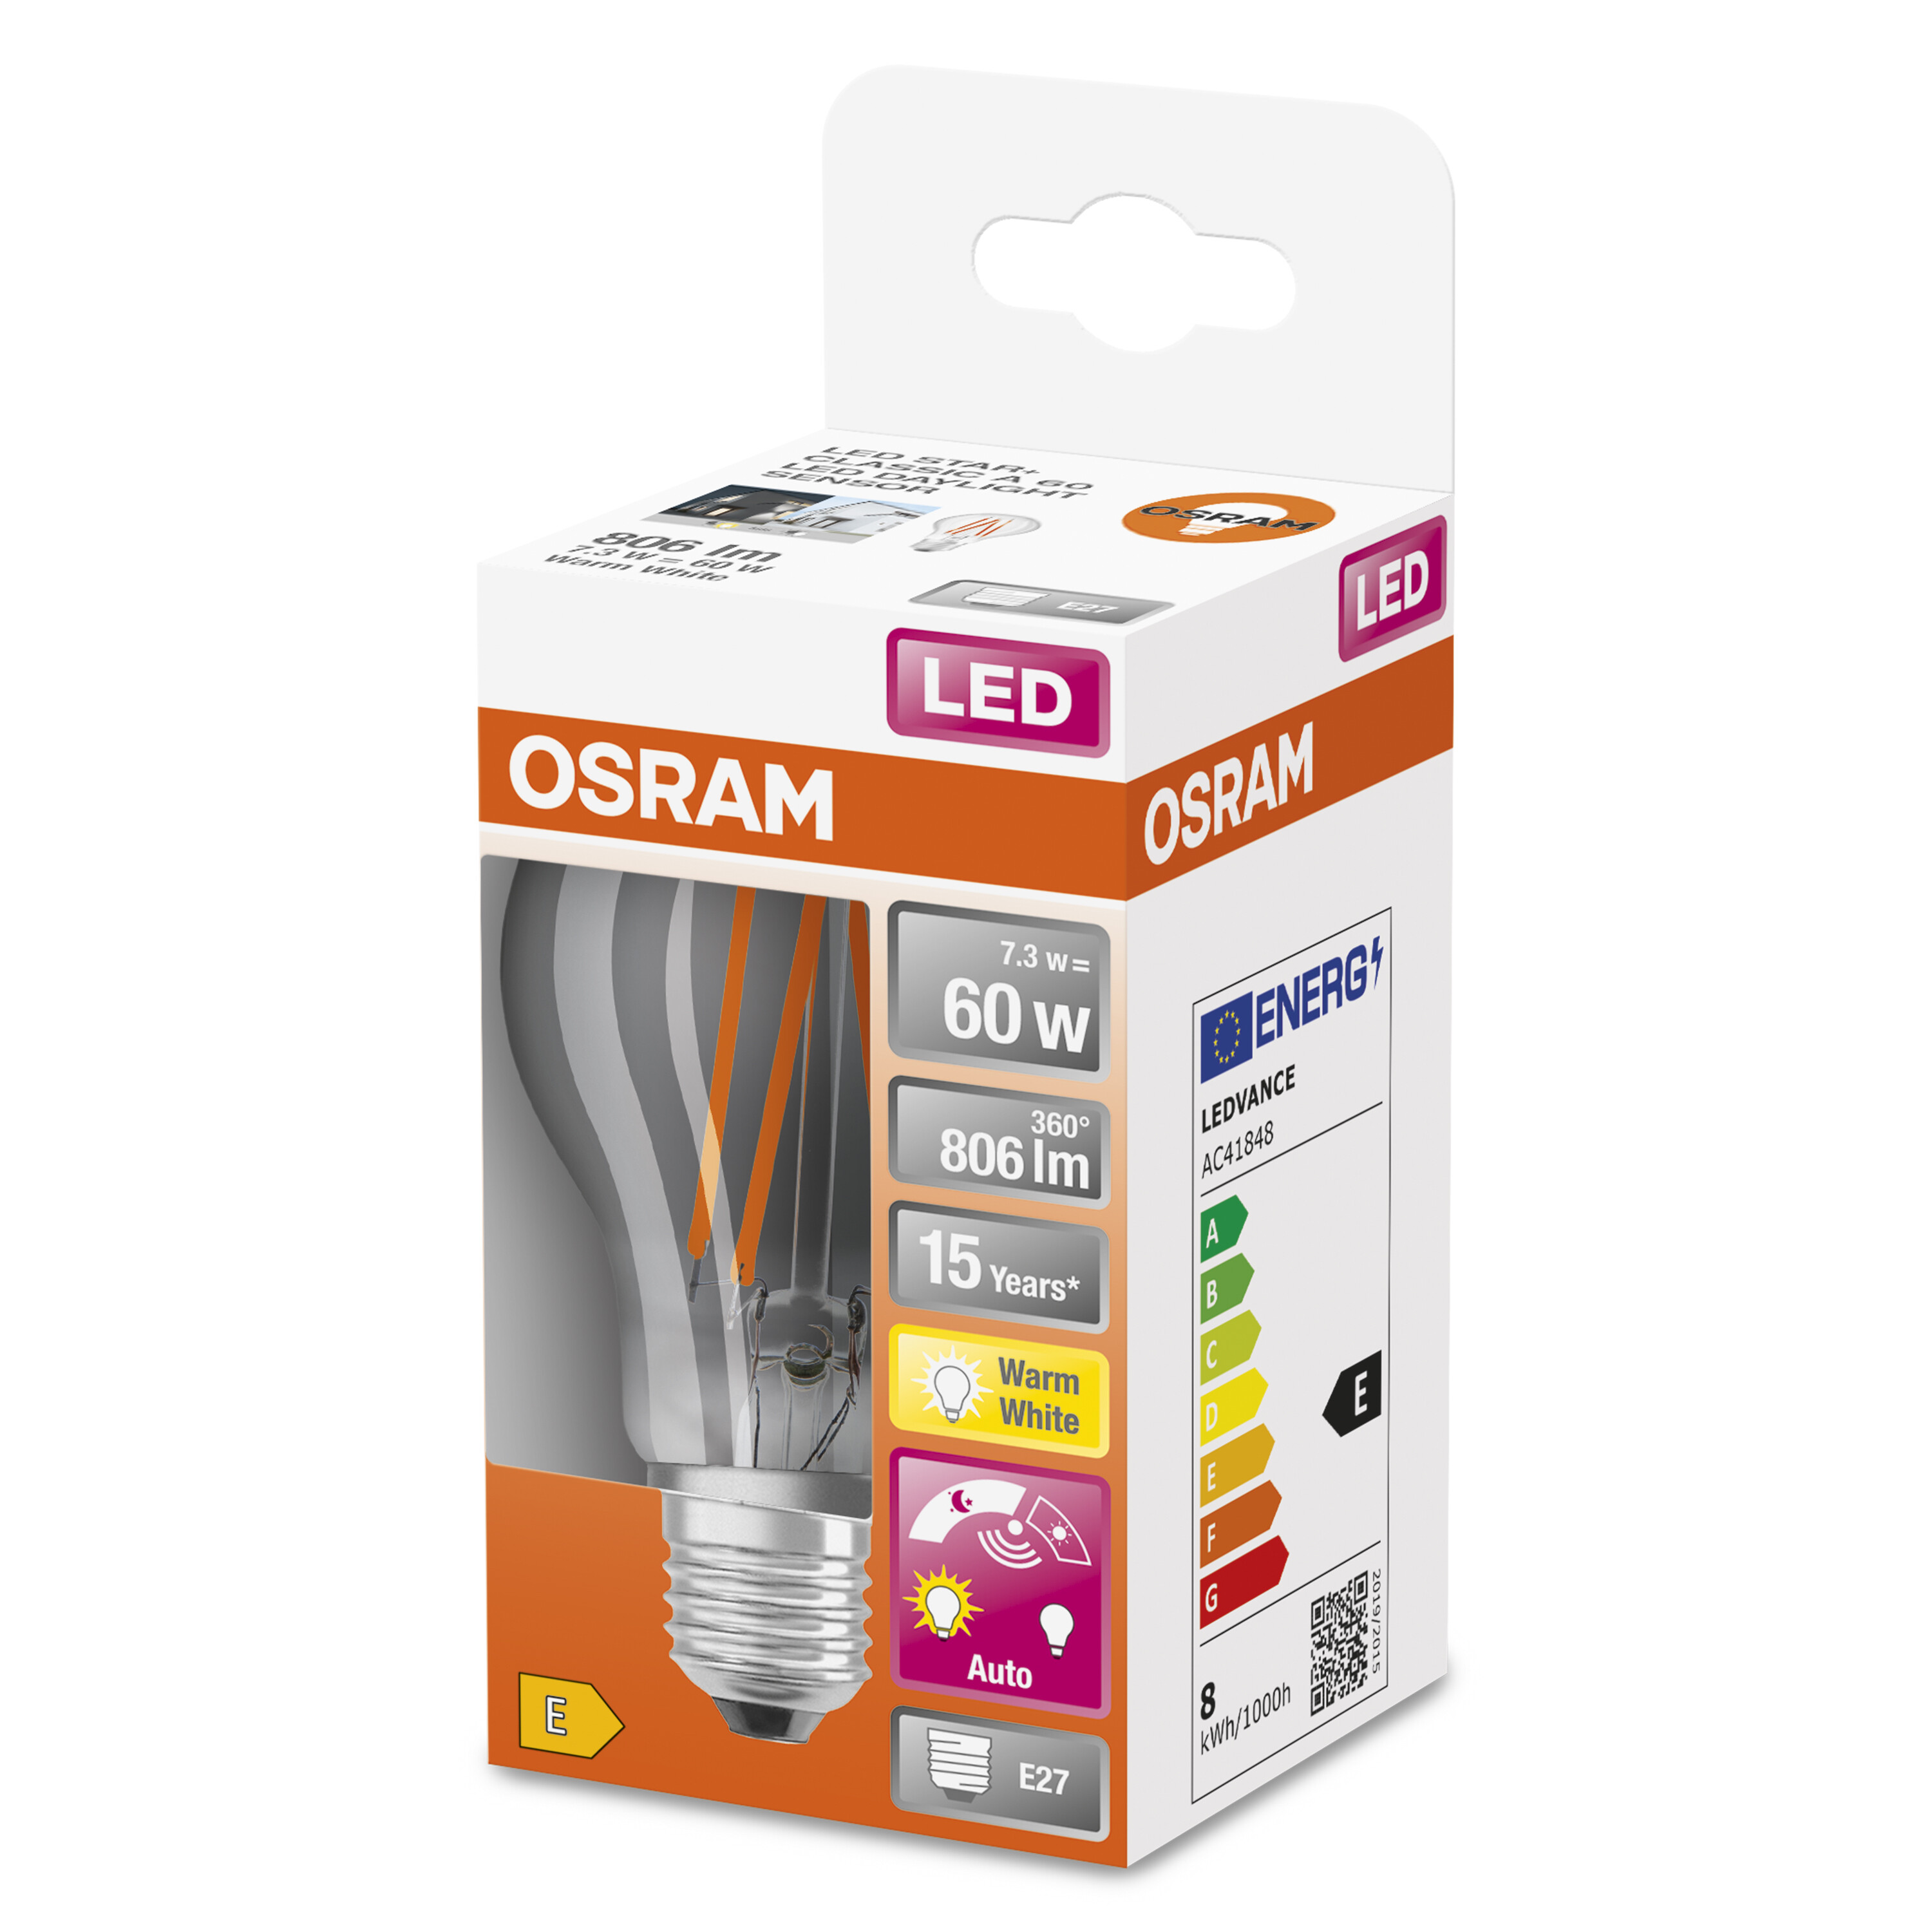 DAYLIGHT Lumen LED SENSOR Warmweiß 806 CLASSIC OSRAM  Lampe LED A